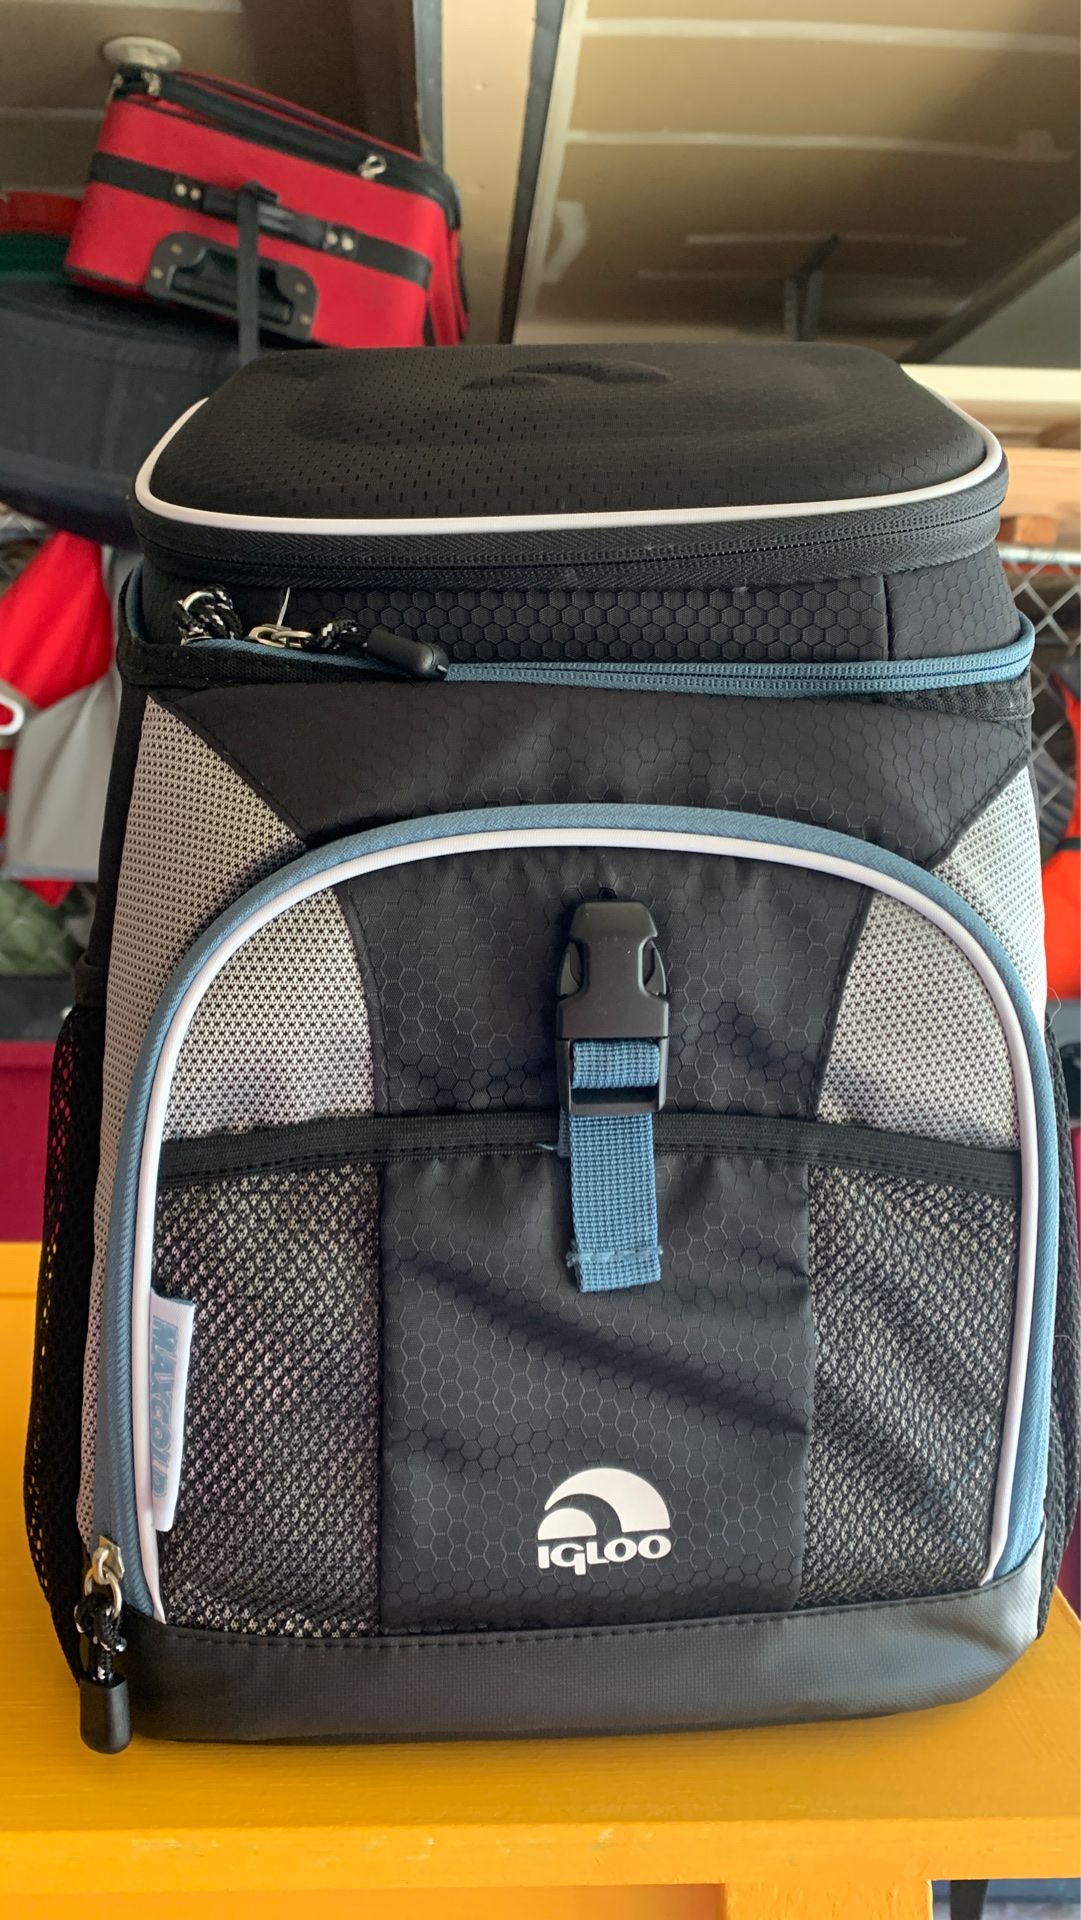 New igloo backpack cooler x2